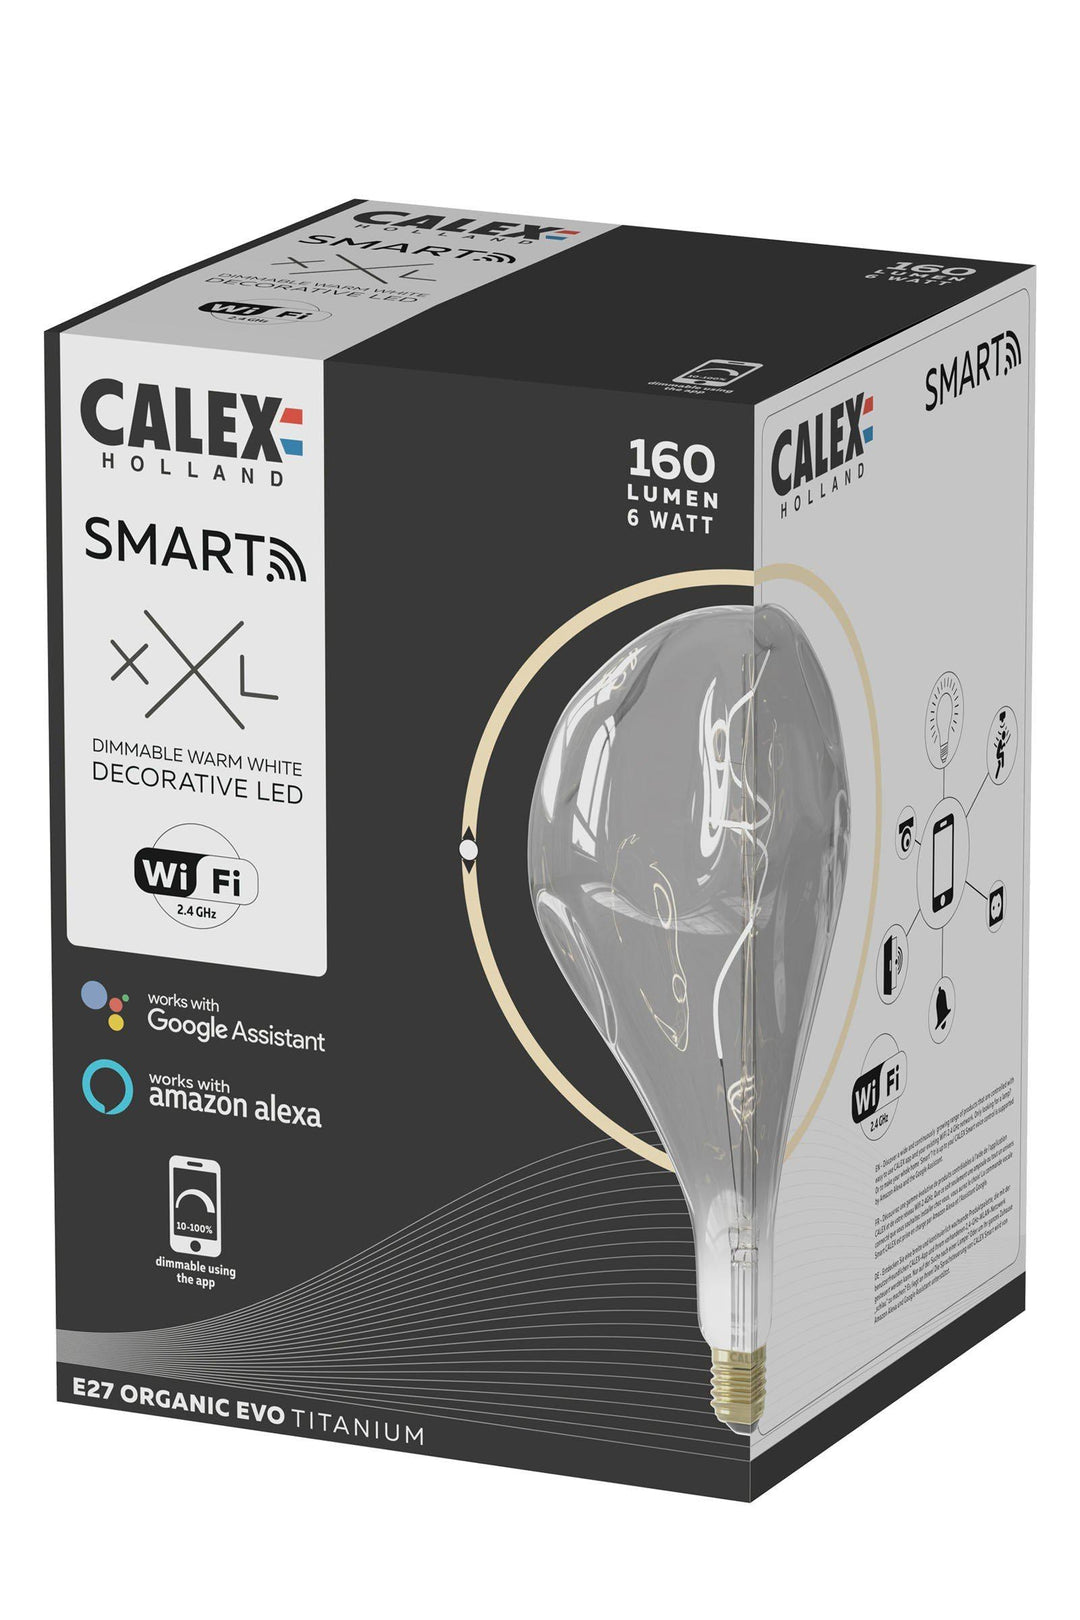 Calex Smart XXL Organic Evo Titanium